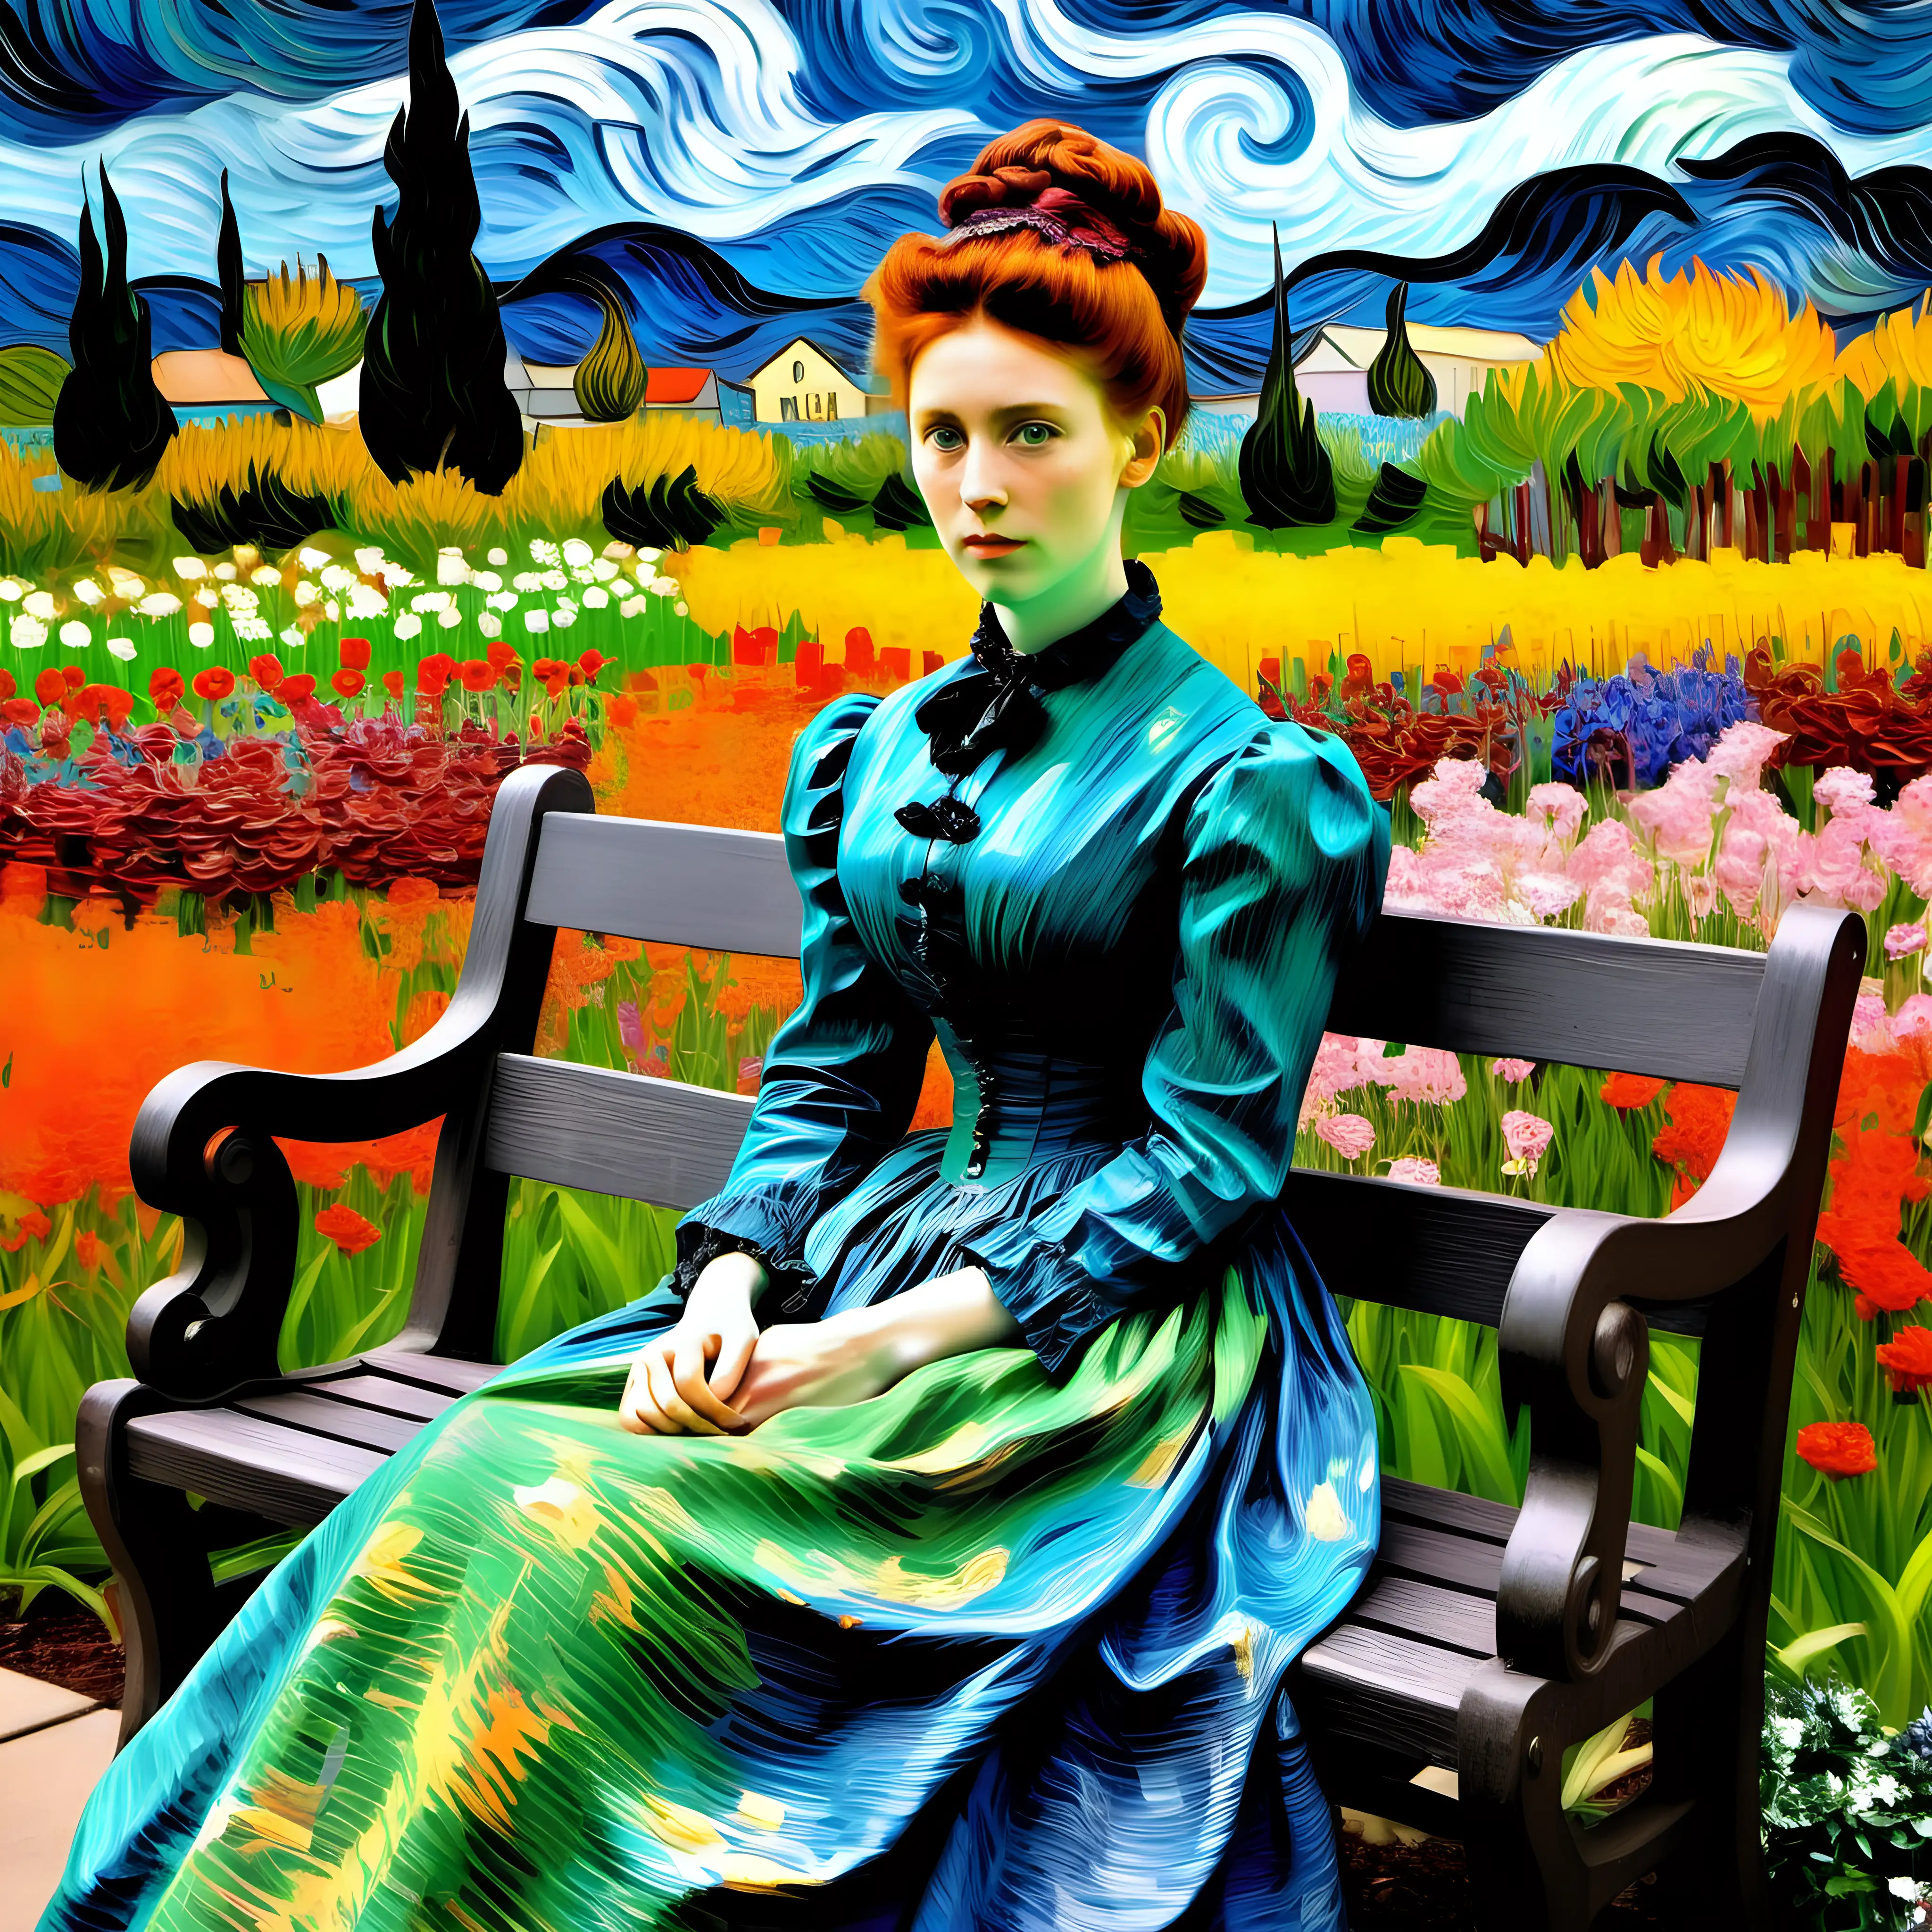 Auburn Haired Woman in 1880s Dress Amid Van Gogh Style Flower Garden